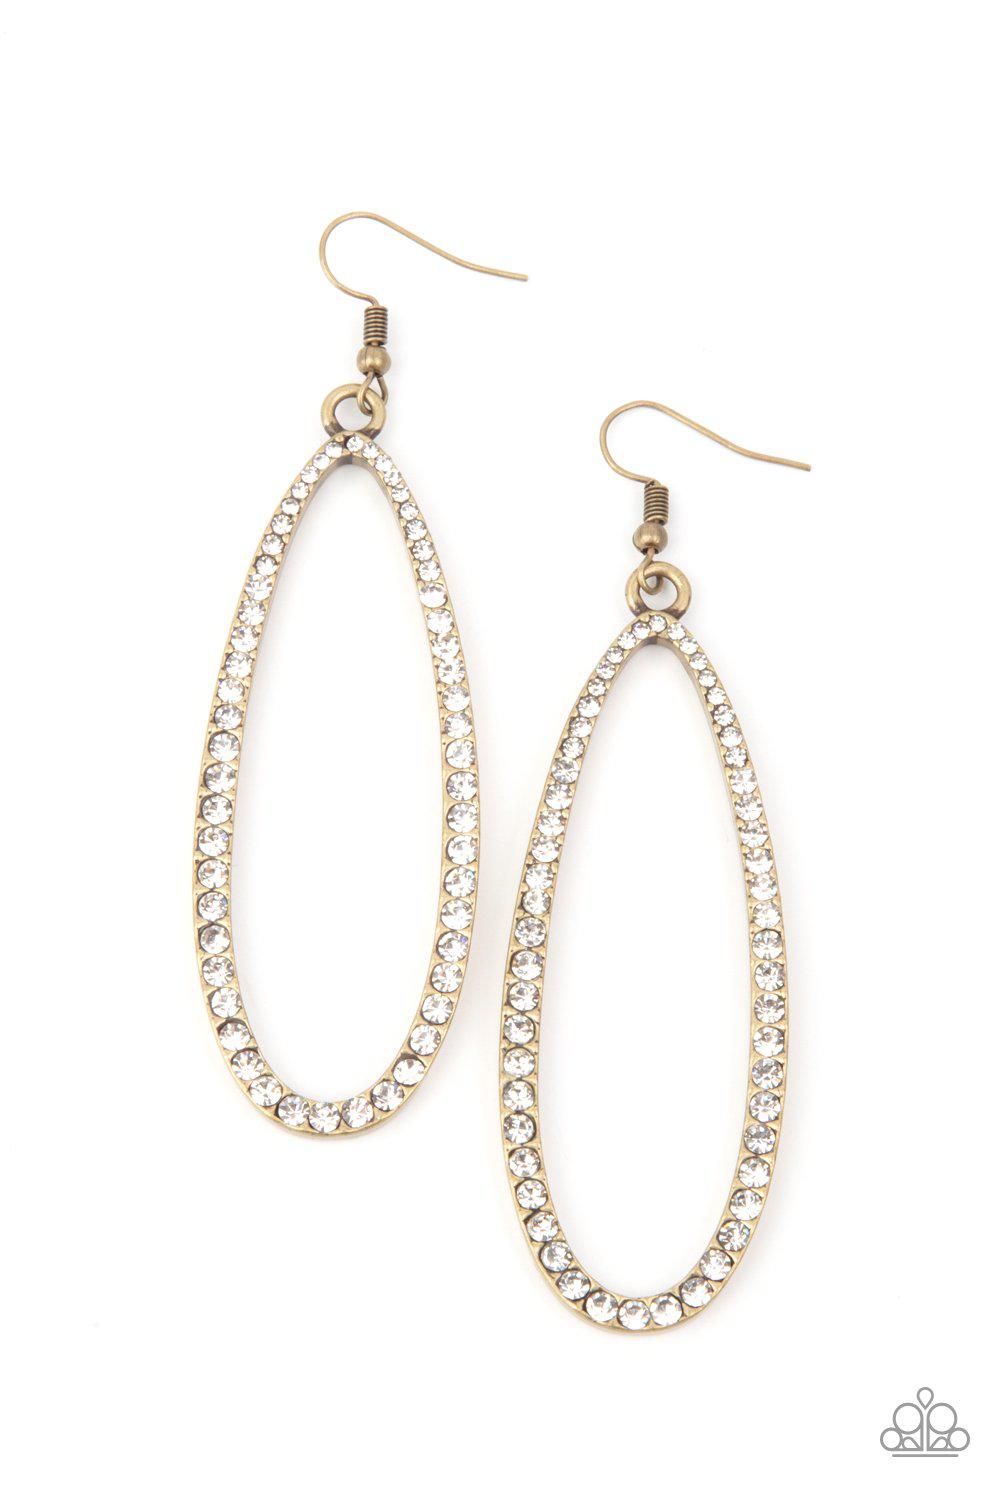 Dazzling Decorum Brass and White Rhinestone Earrings - Paparazzi Accessories- lightbox - CarasShop.com - $5 Jewelry by Cara Jewels